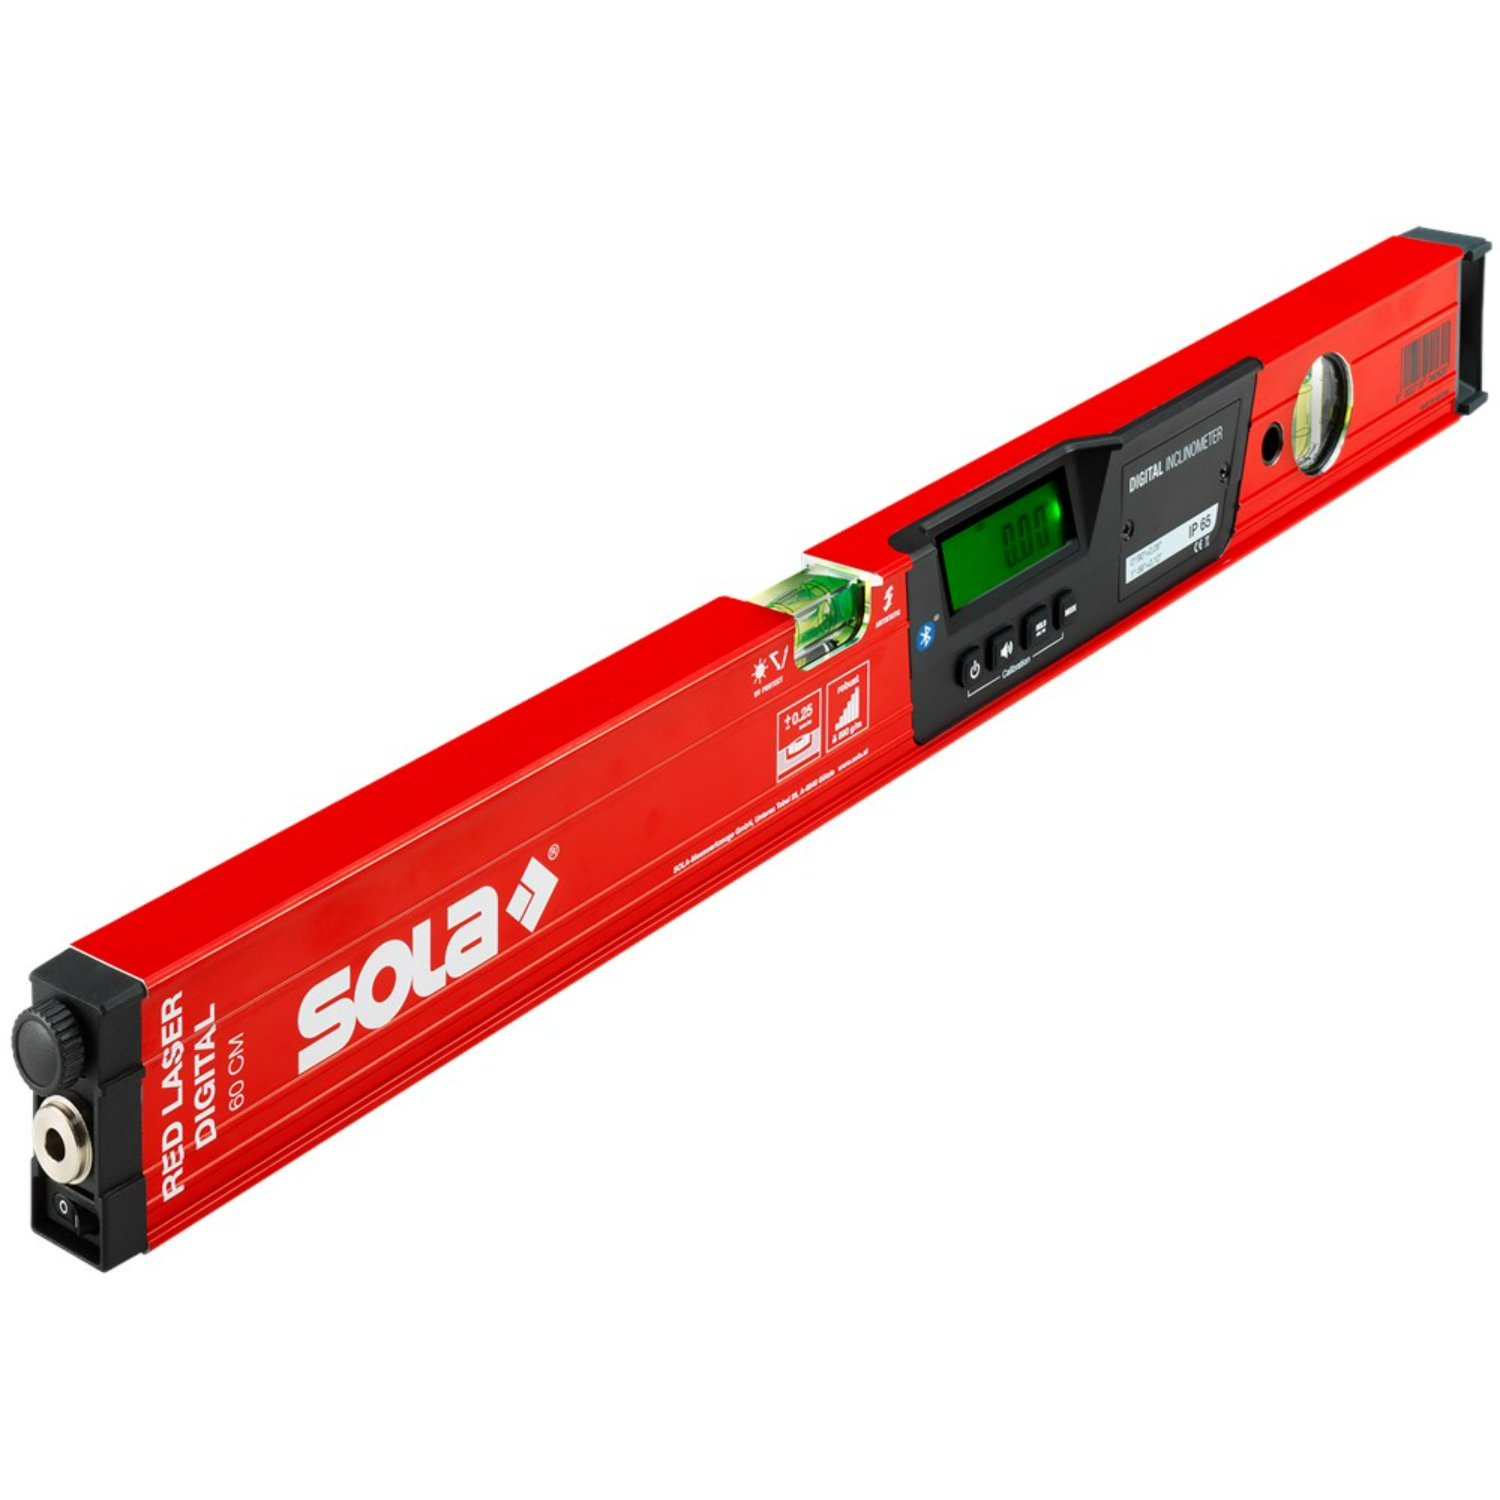 Sola RED 60 niveau laser numérique digital Bluetooth - 600 mm-image